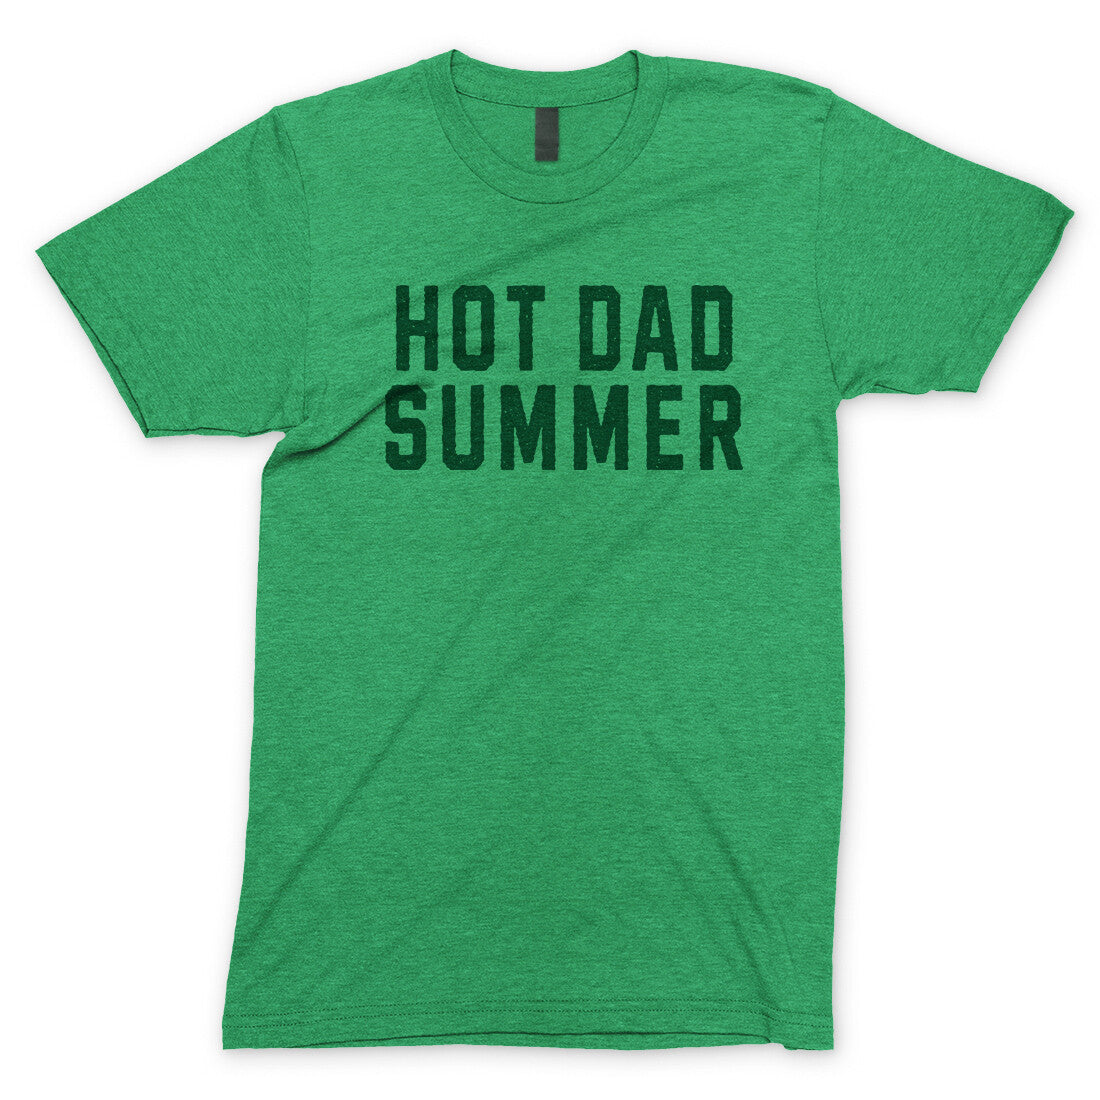 Hot Dad Summer in Heather Irish Green Color